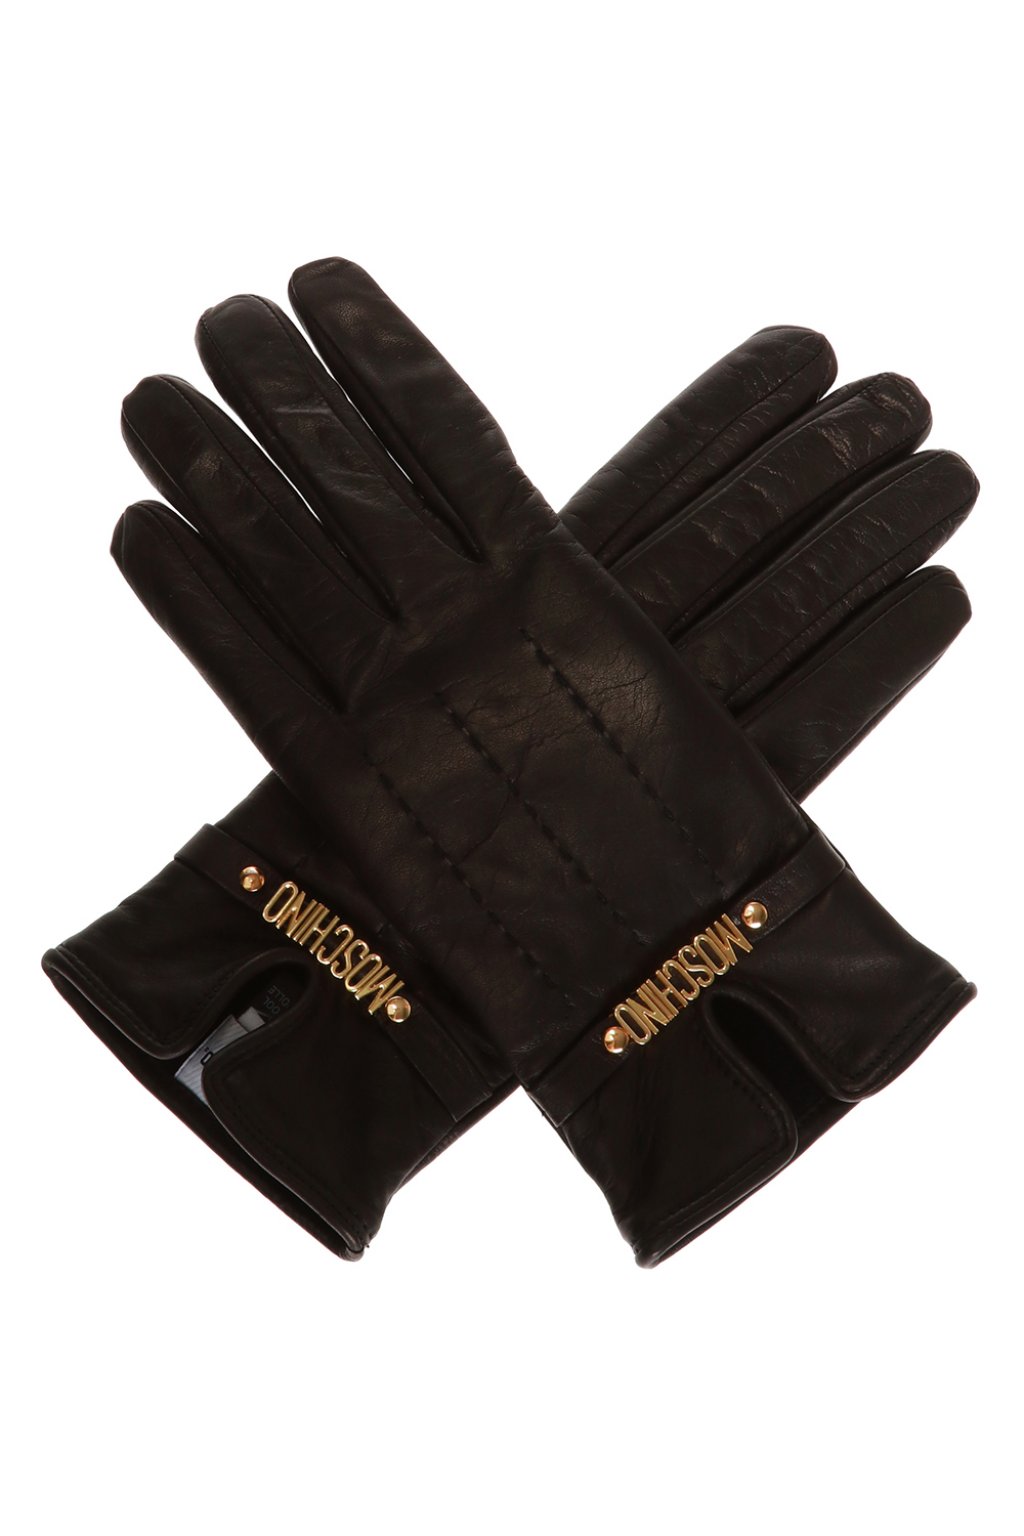 moschino gloves Off 74% - www.loverethymno.com